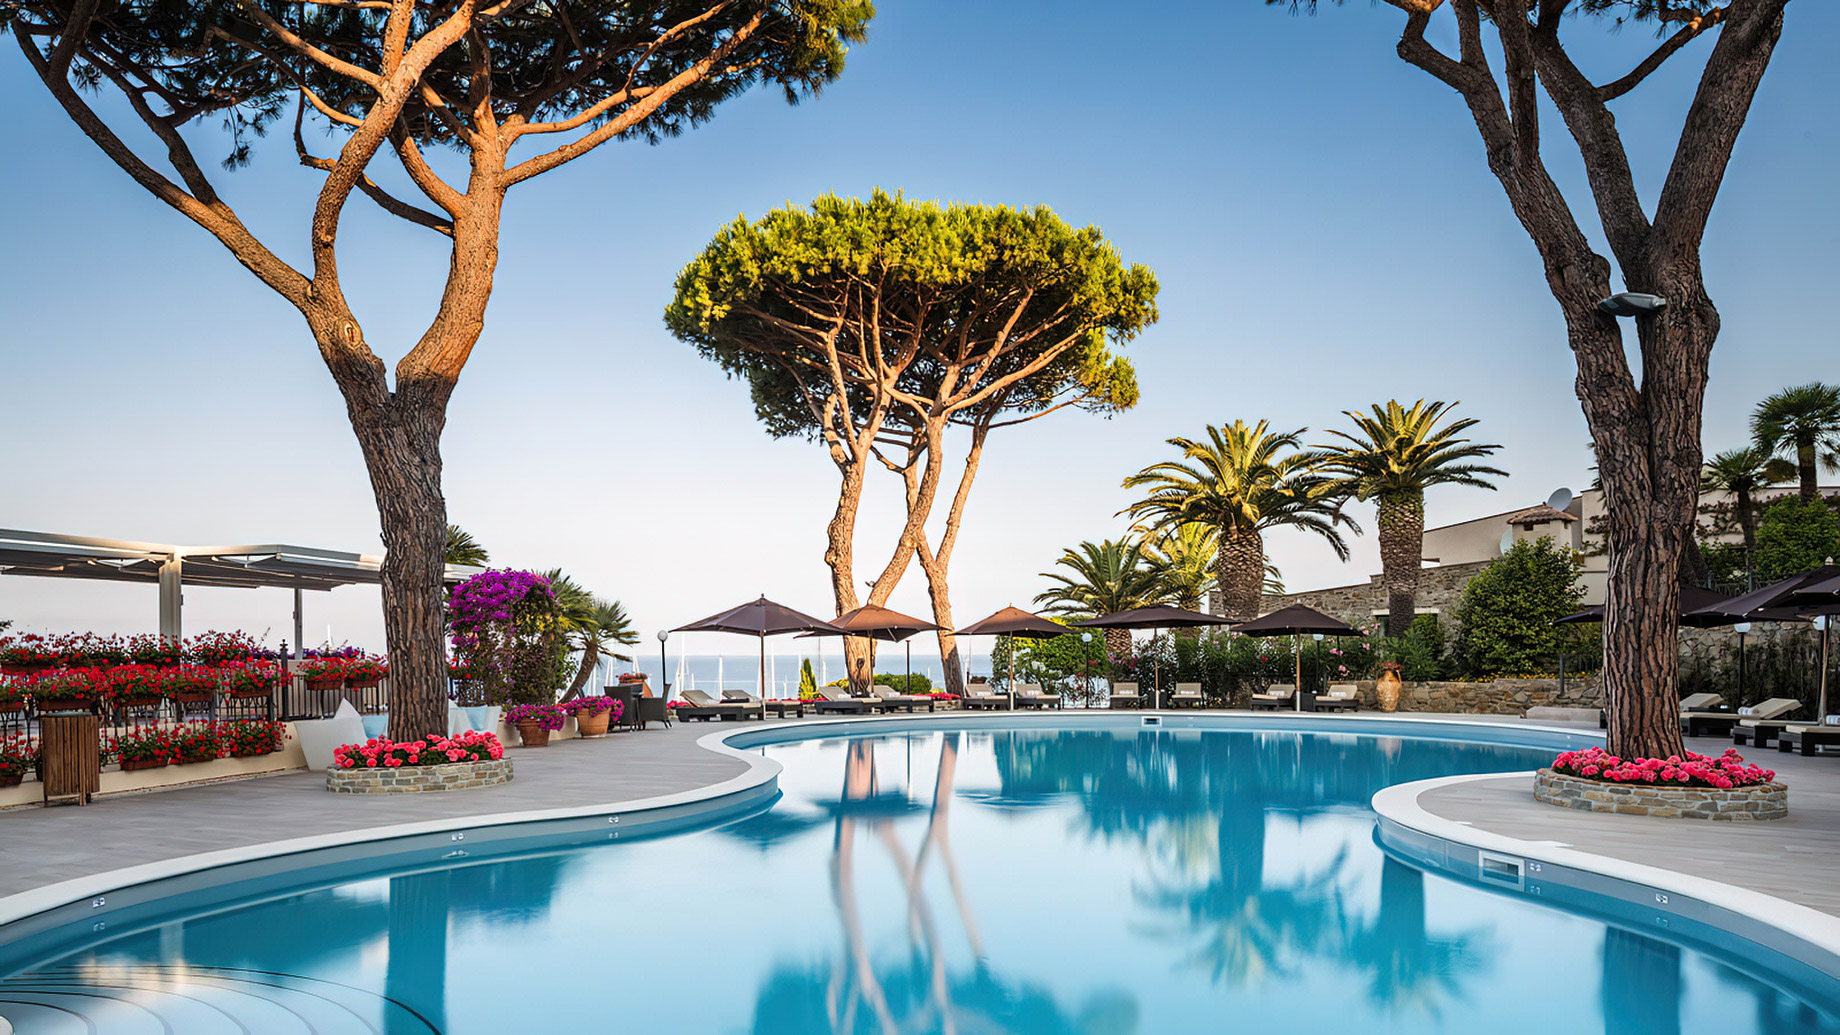 Baglioni Resort Cala del Porto Tuscany - Punta Ala, Italy - Pool